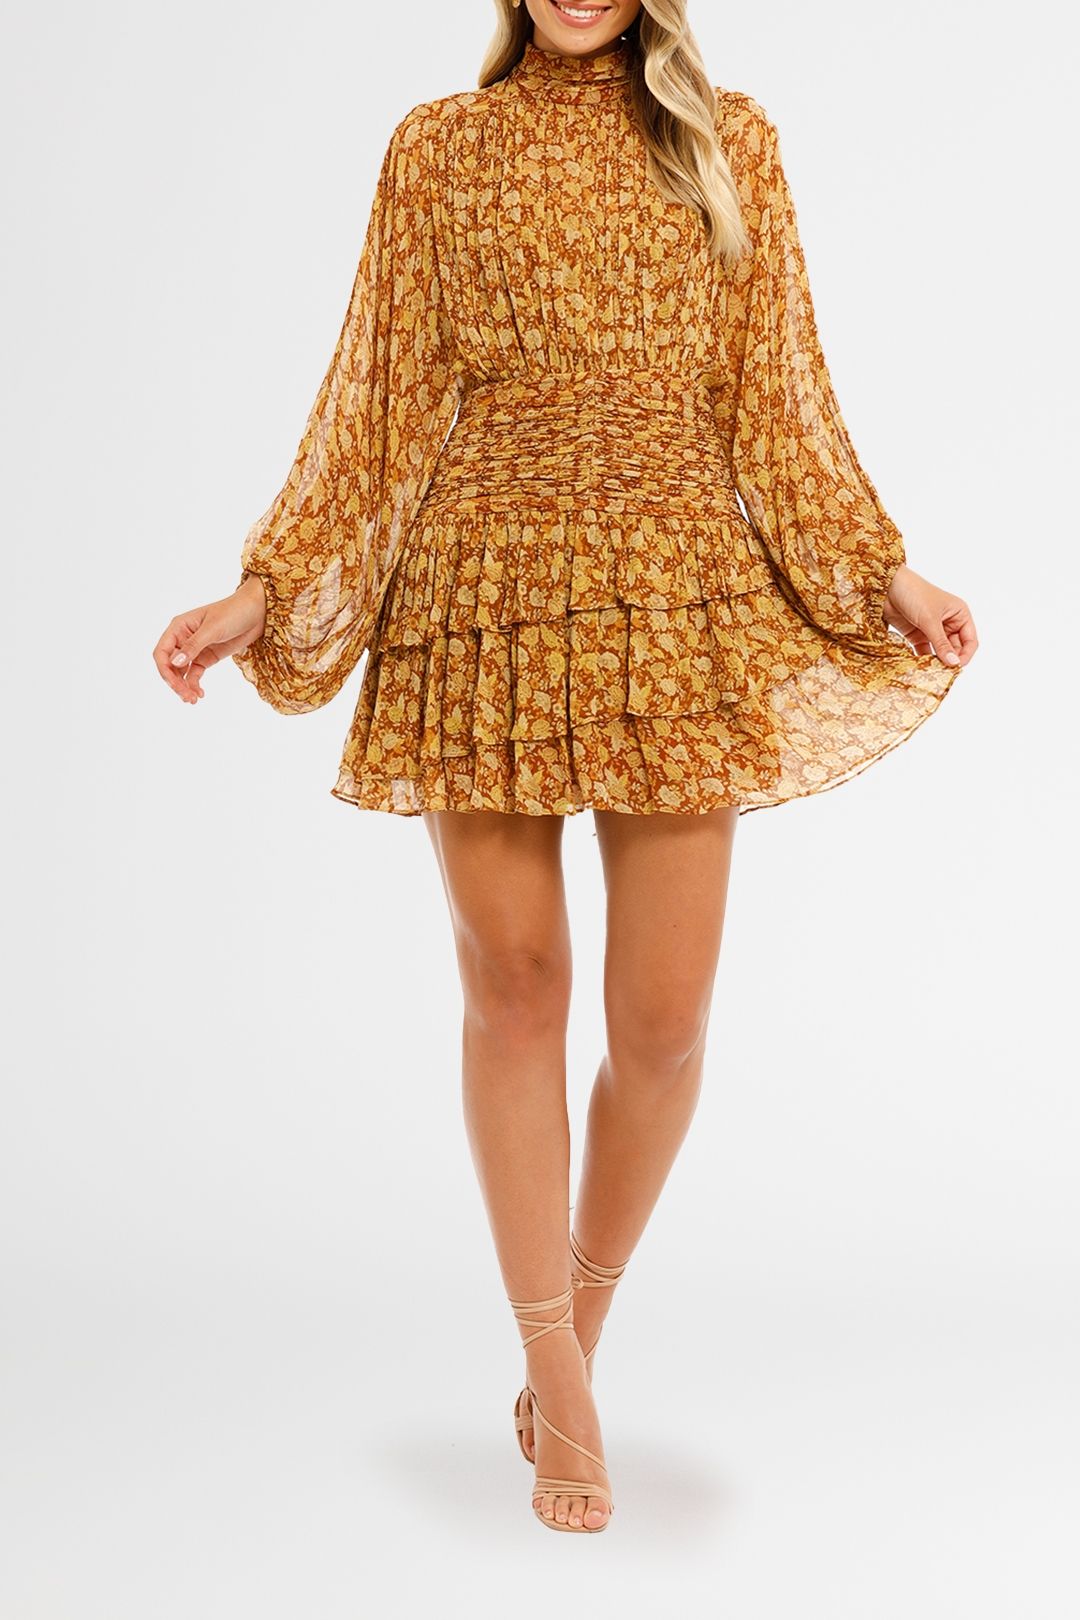 Shona Joy Sunset Ruched Mini Dress Tumeric print